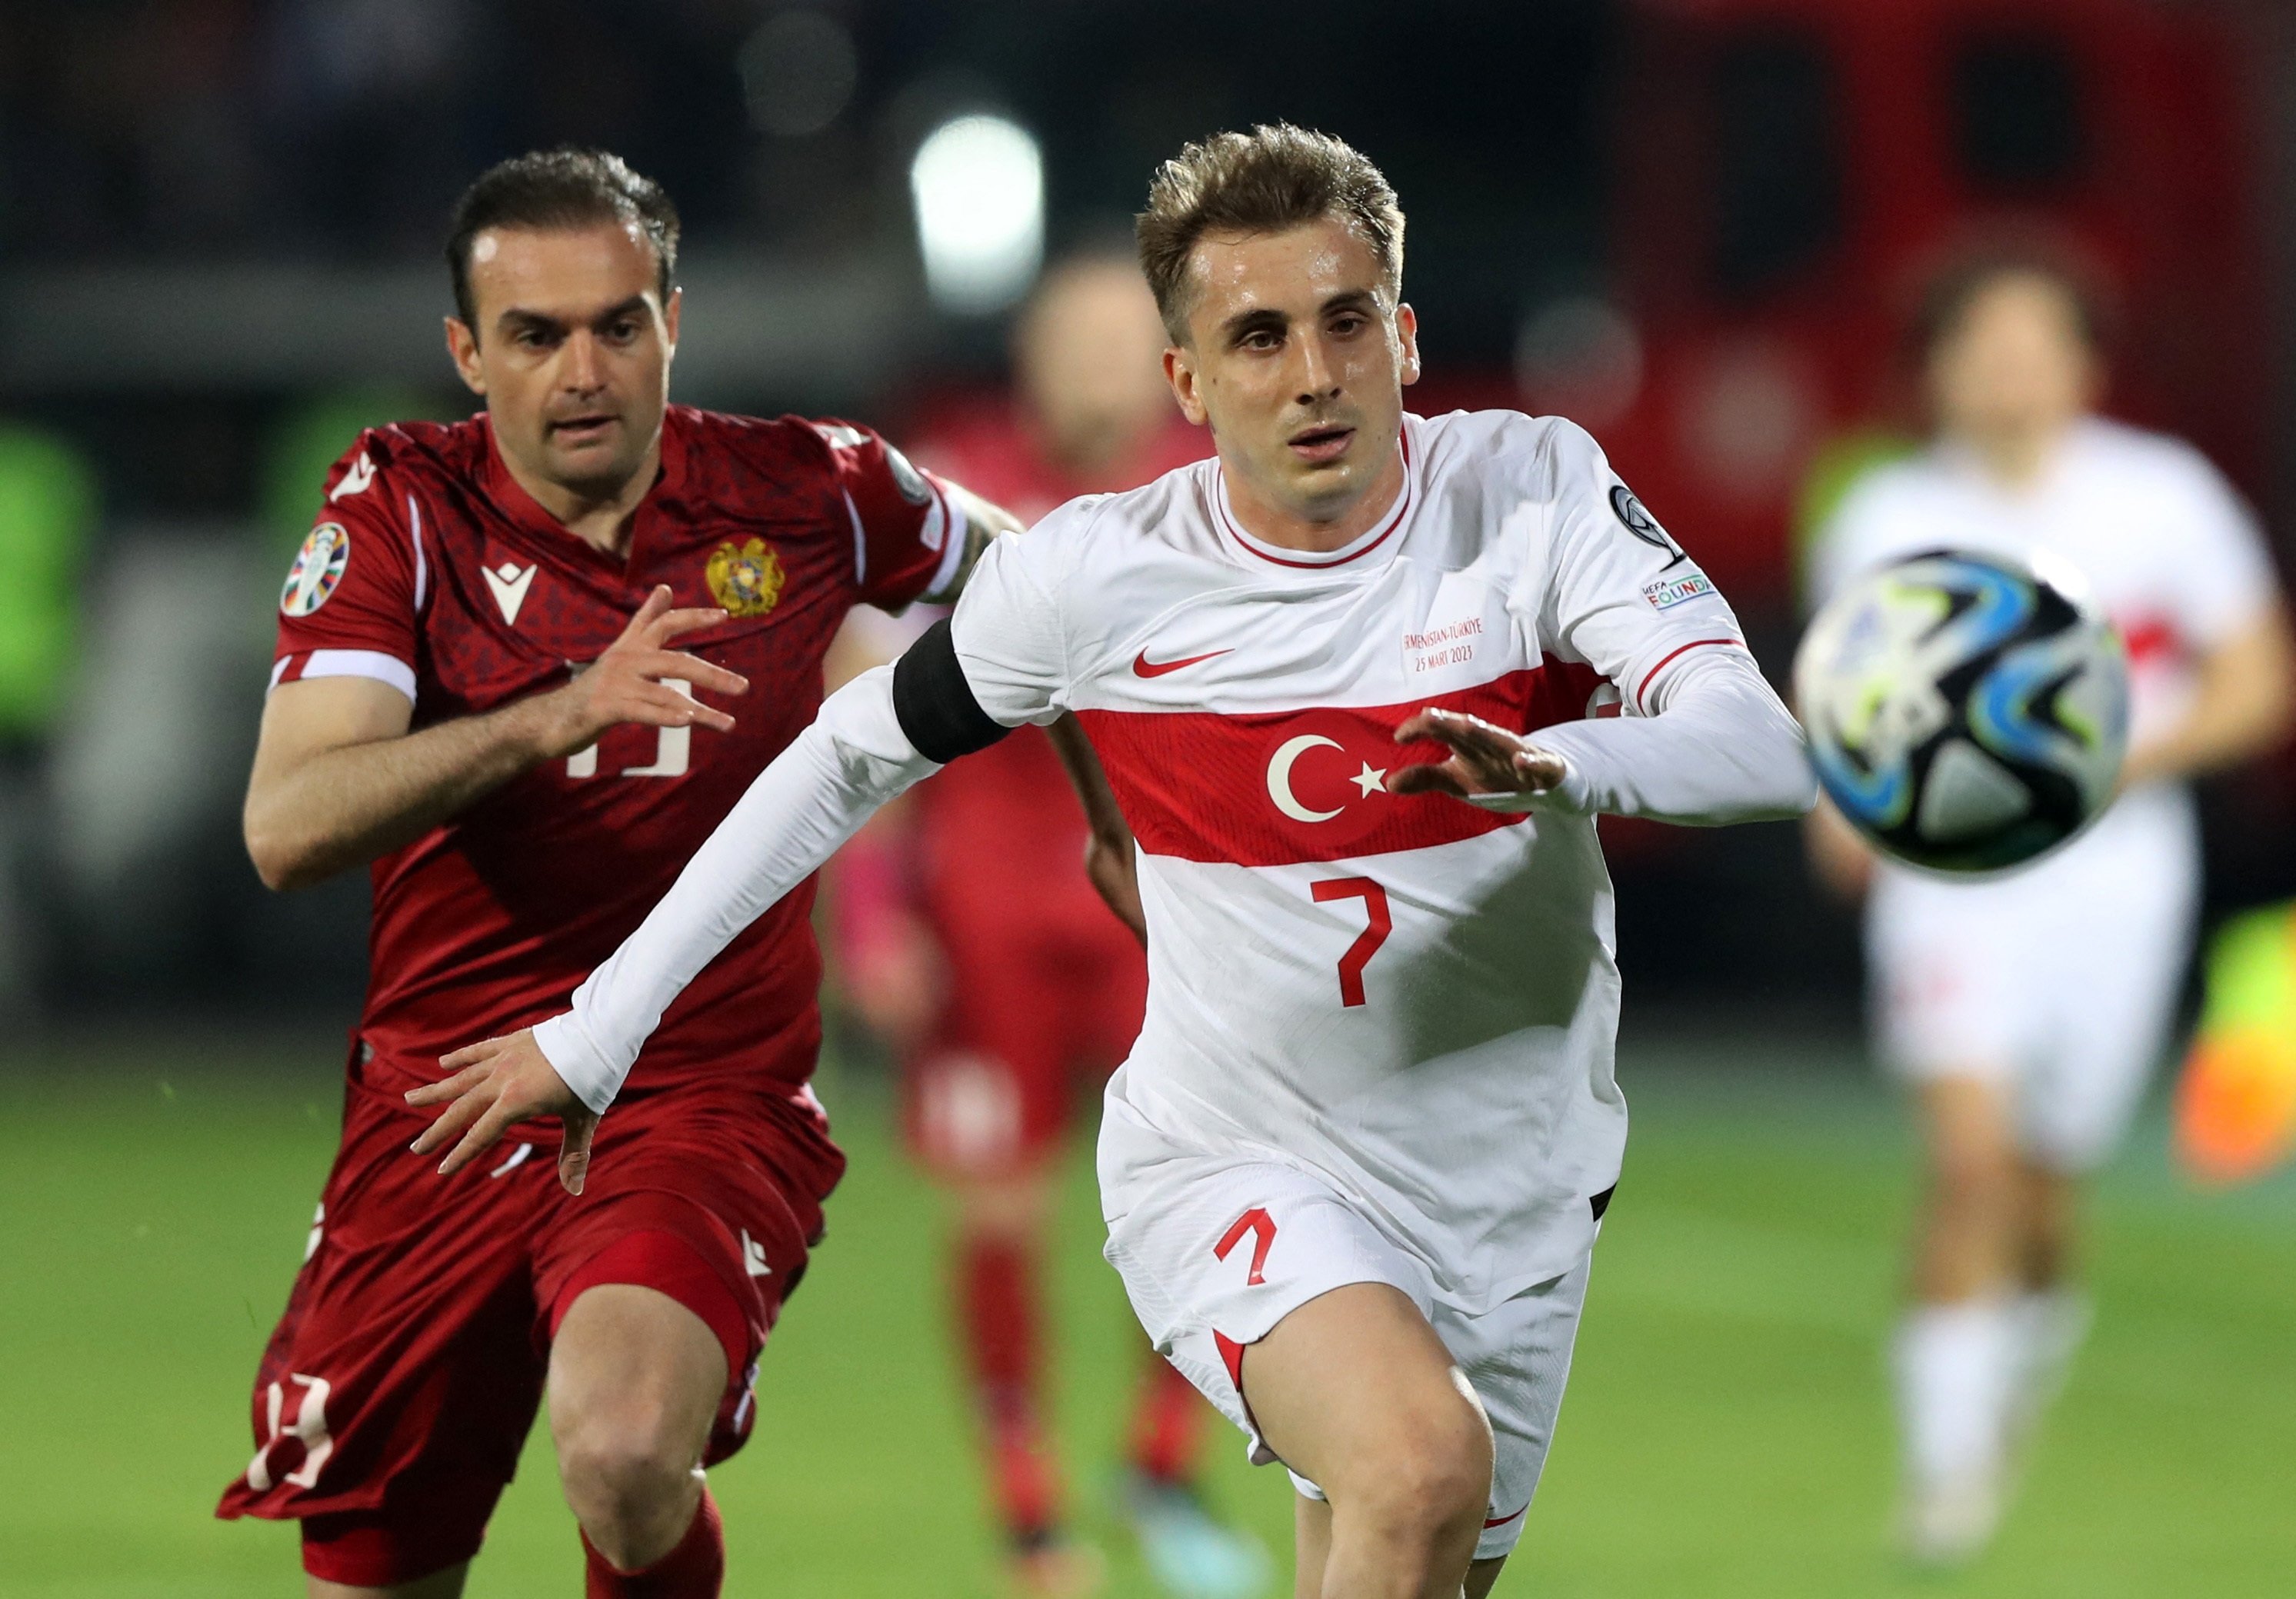 Türkiye beat Armenia 2-1 in Euro 2024 qualifiers | Daily Sabah